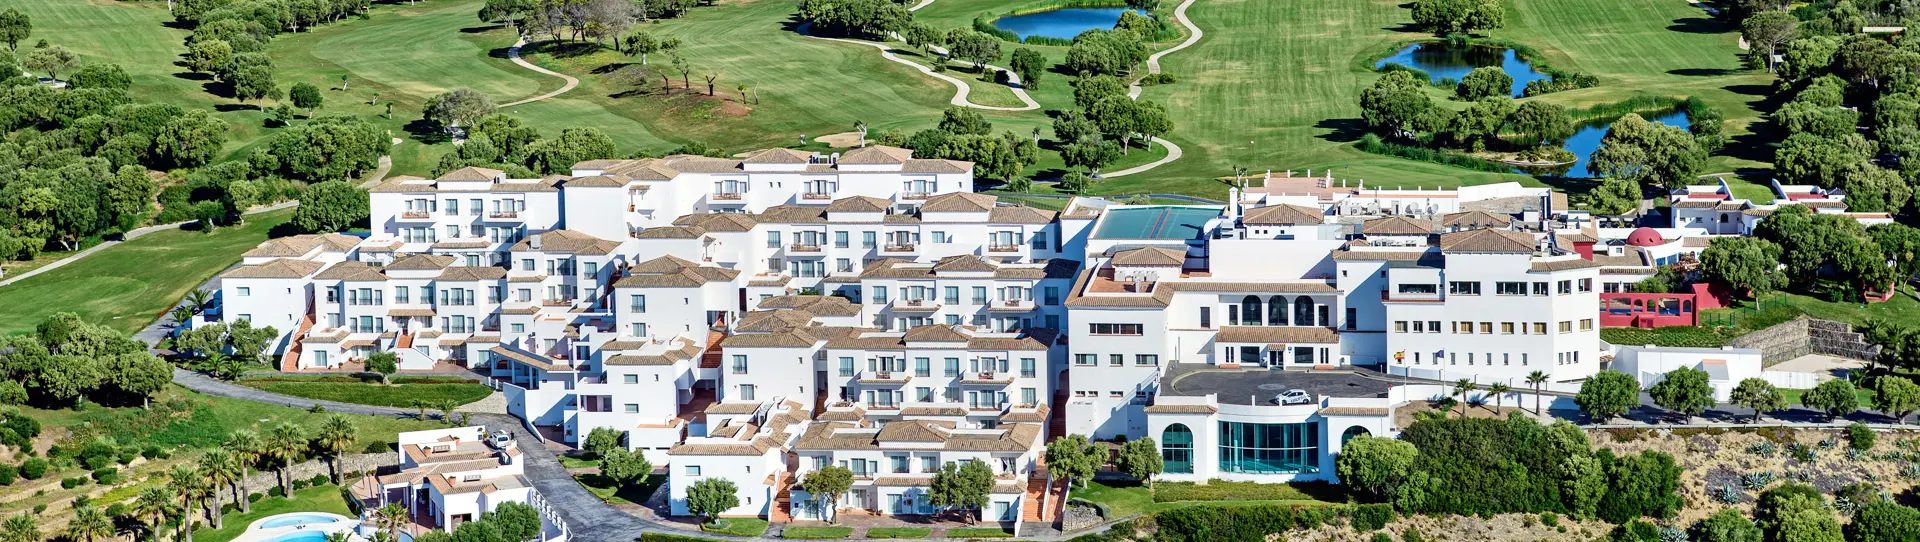 Spain golf holidays - Fairplay Golf & Spa Resort - Photo 1